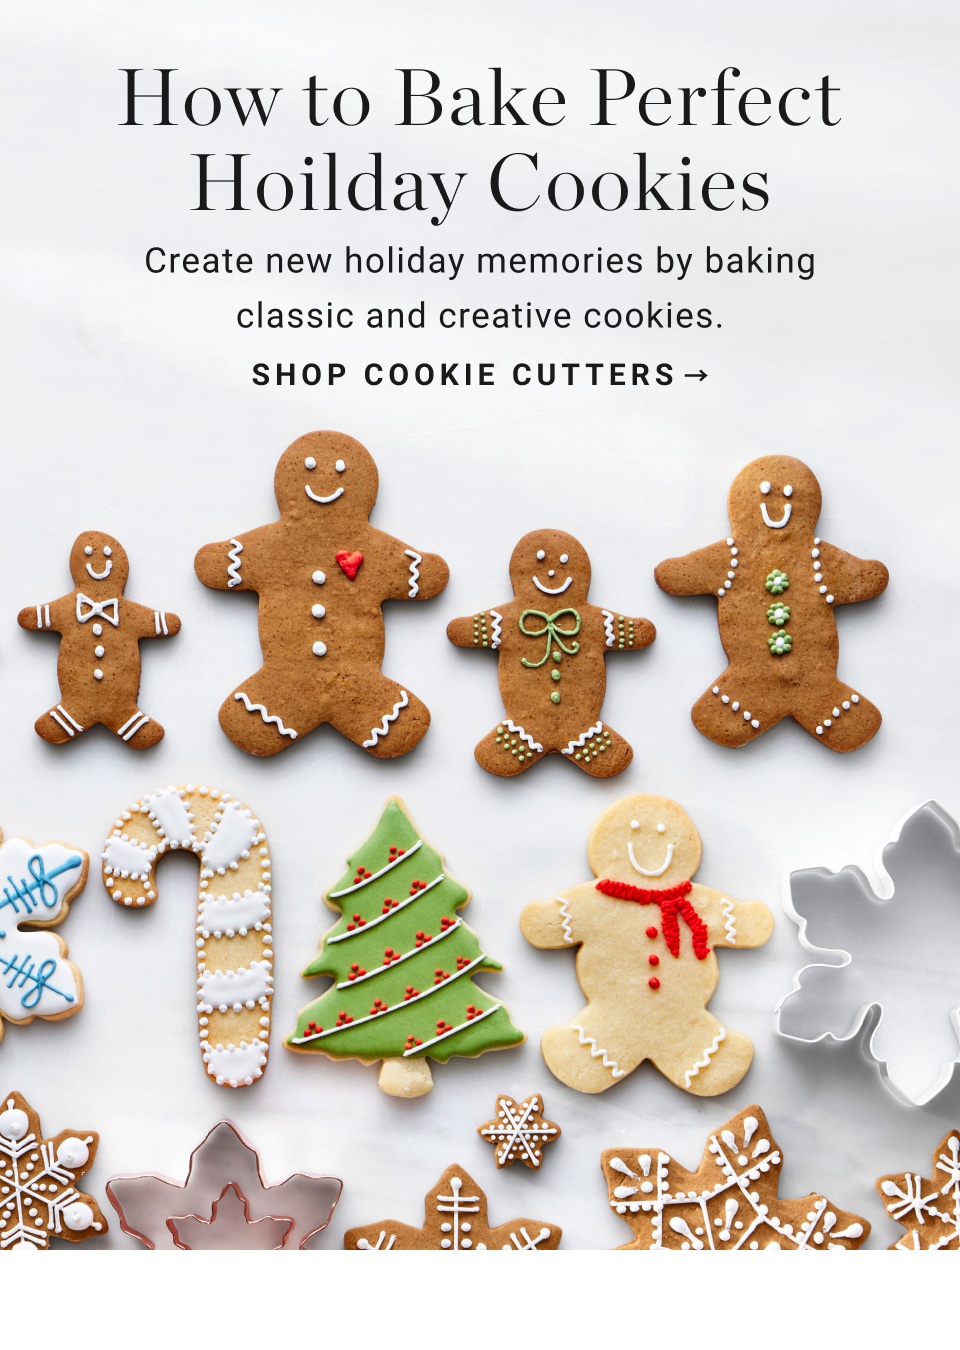 Baker's Pantry Holiday Baking Cookie Baking Gift Set Spatula